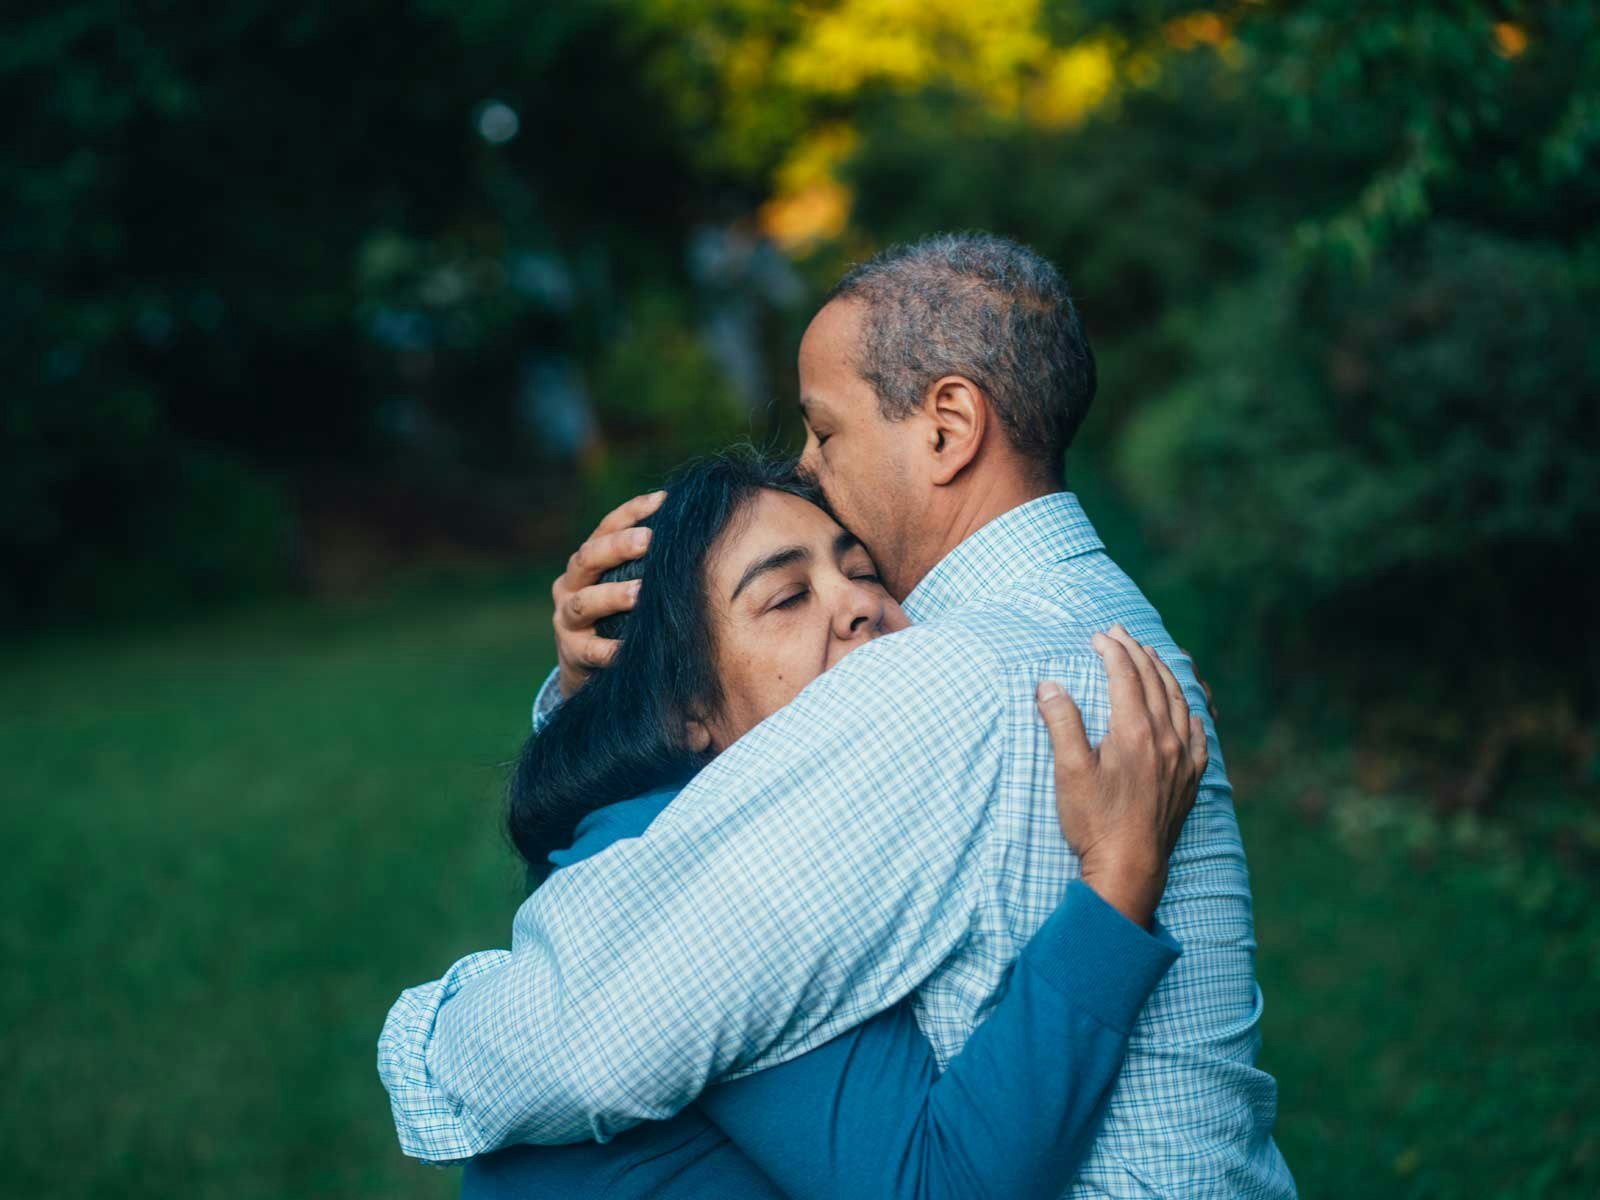 A couple shares an emotional hug.